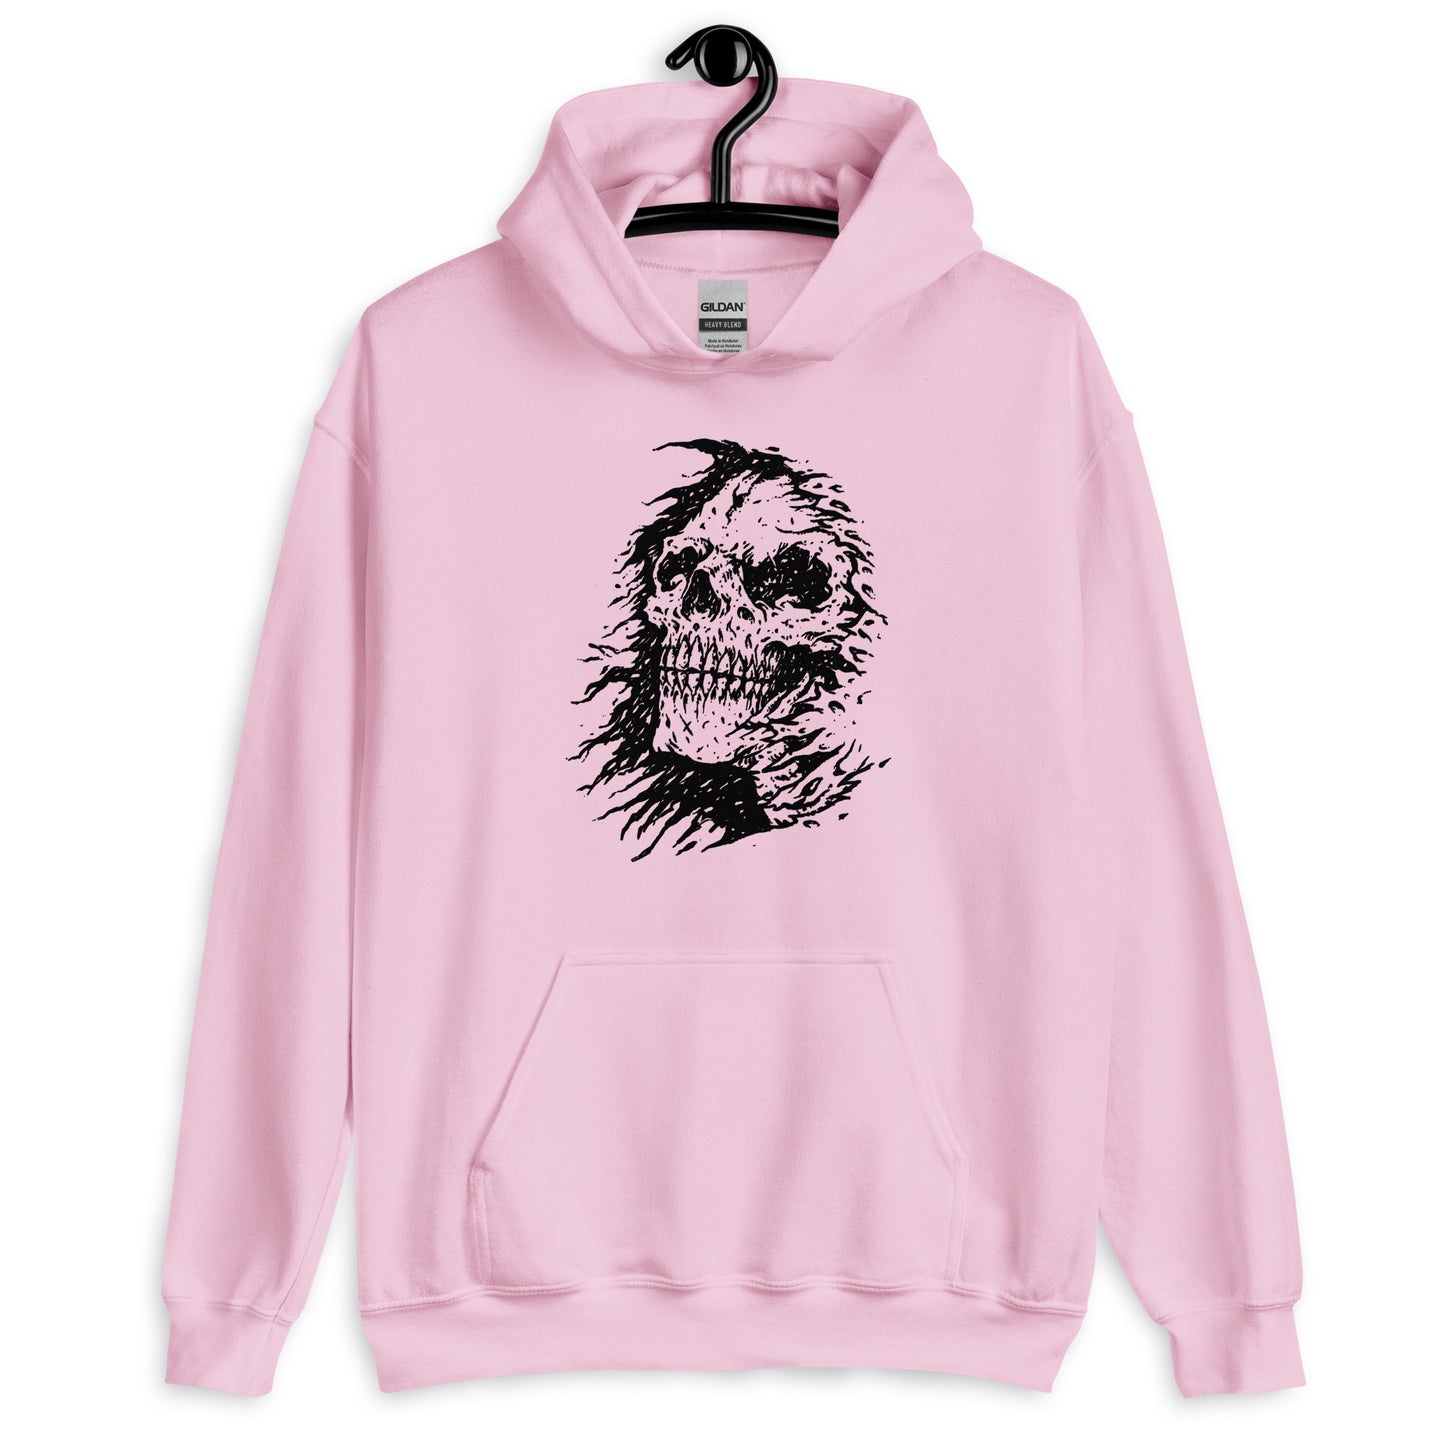 The Grim Reapers Skull Face Hoodie pink